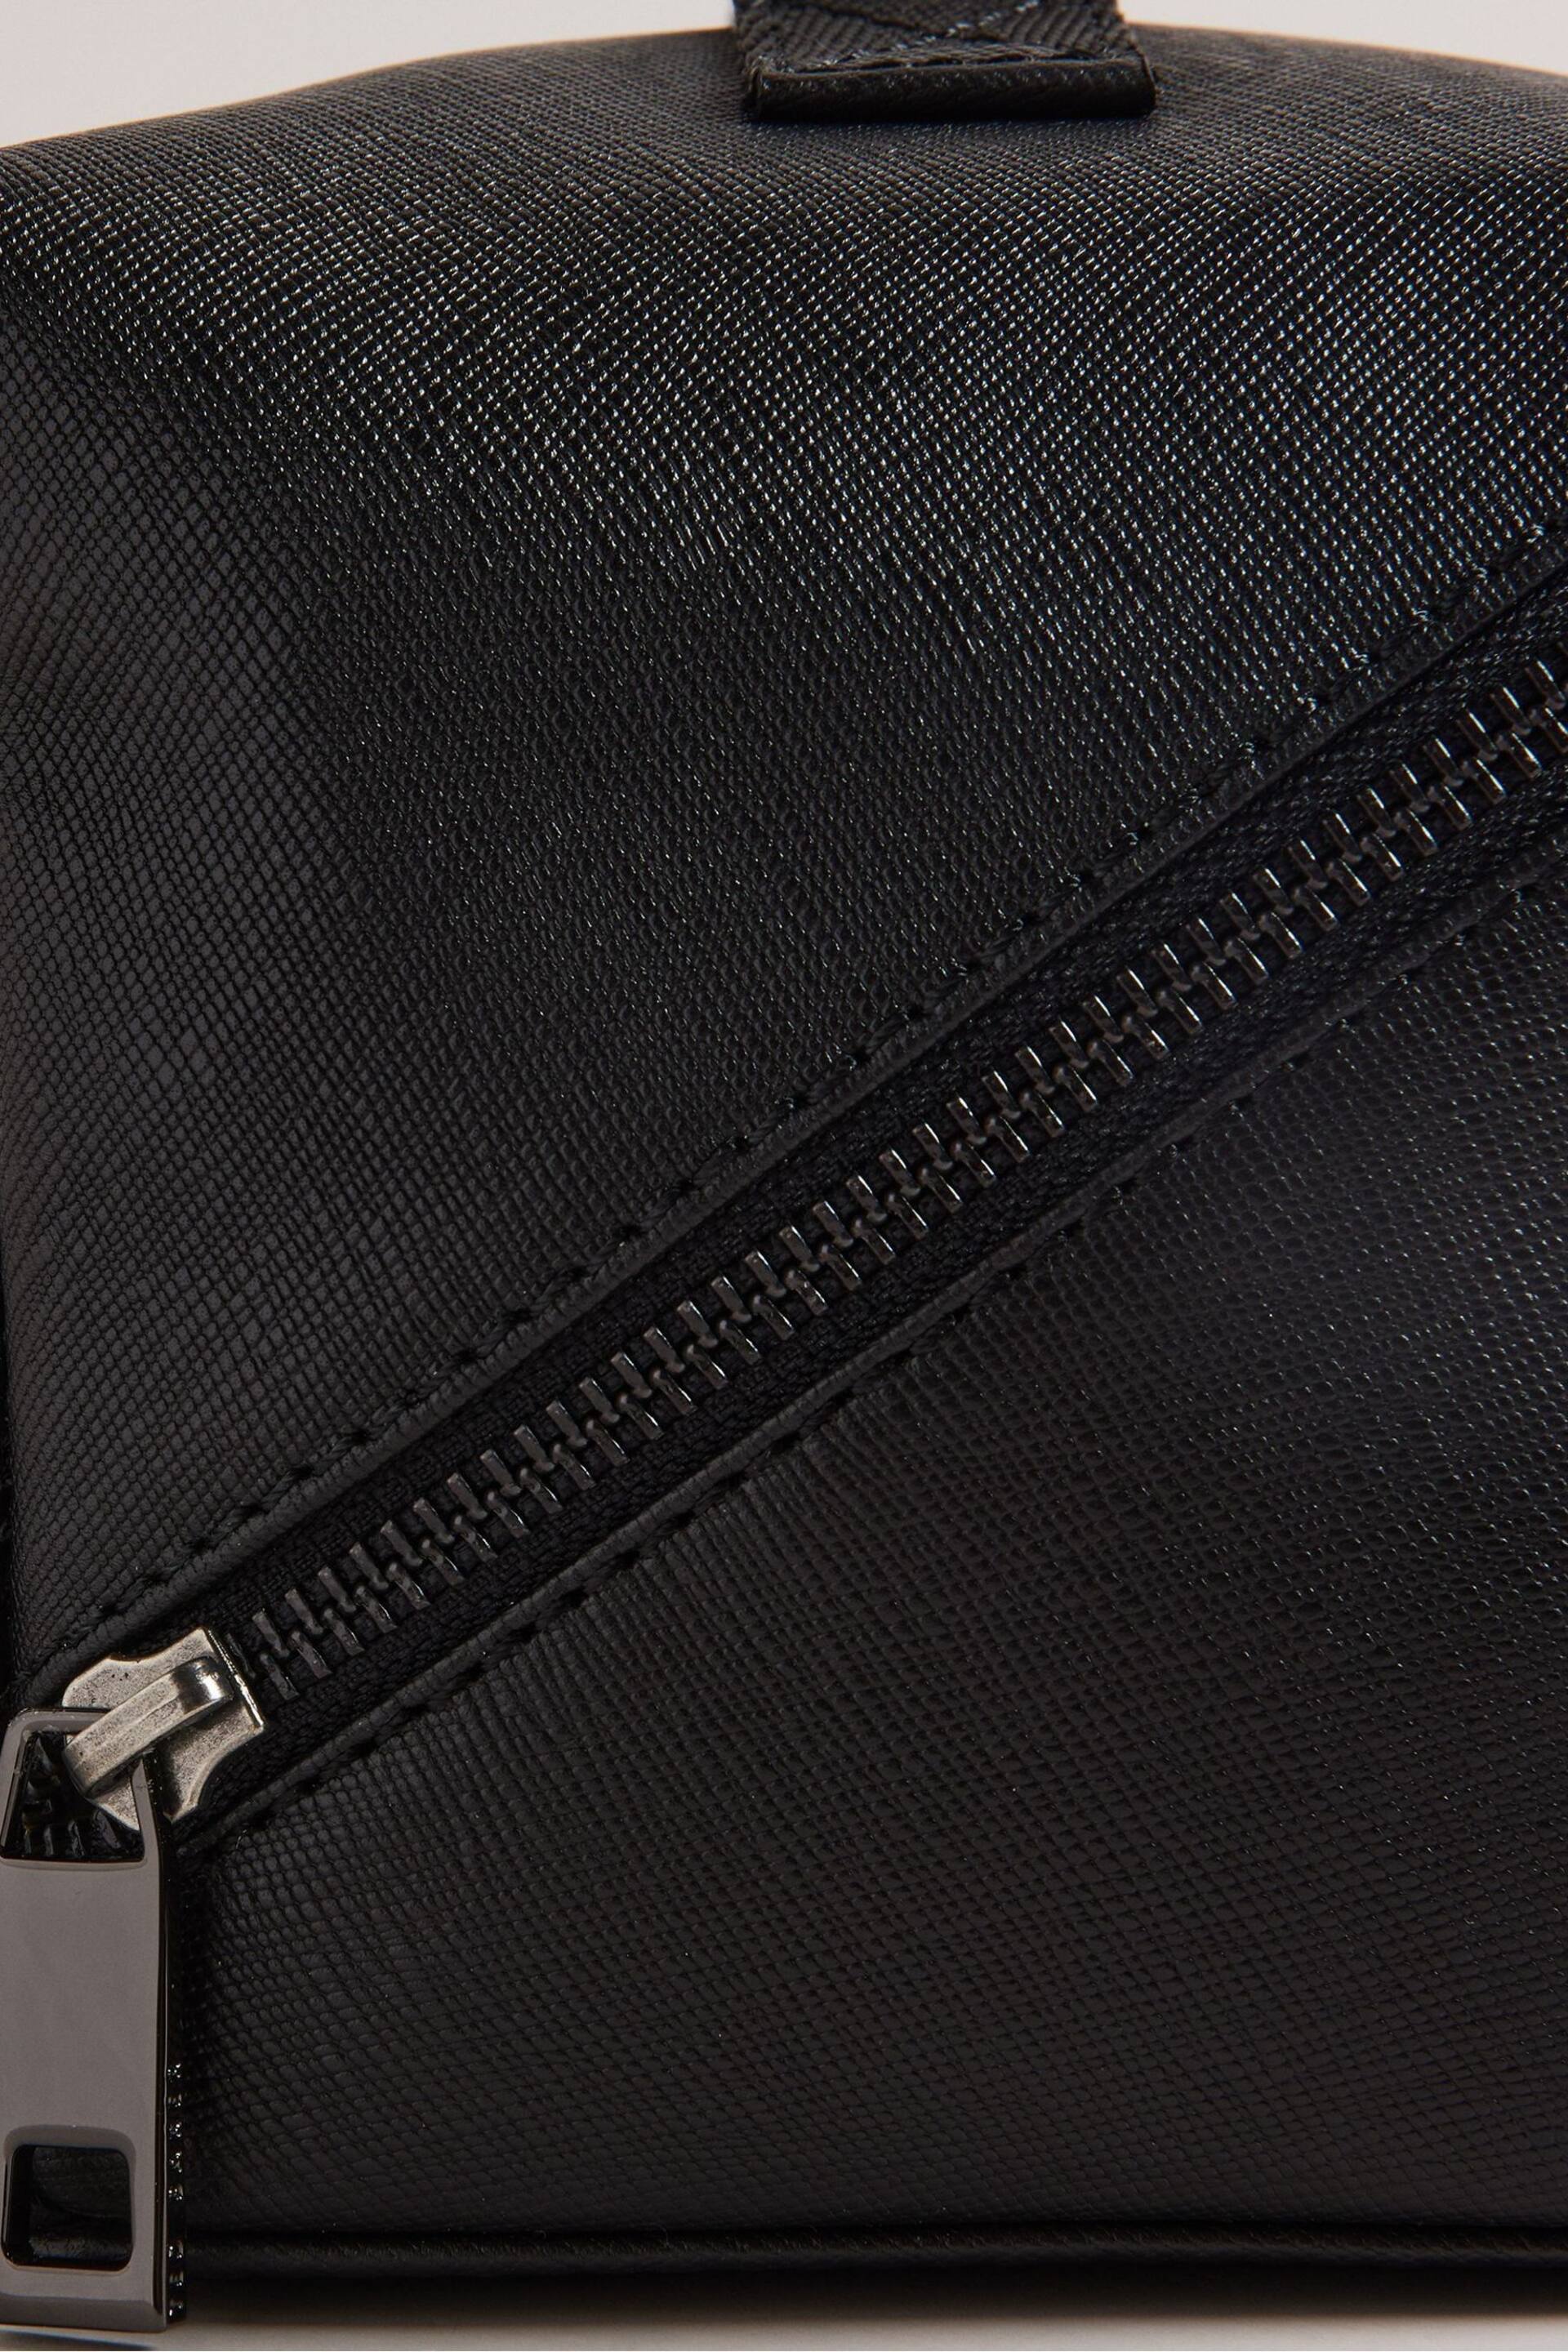 Ted Baker Black Saffiano Leather Hanss Washbag - Image 3 of 3